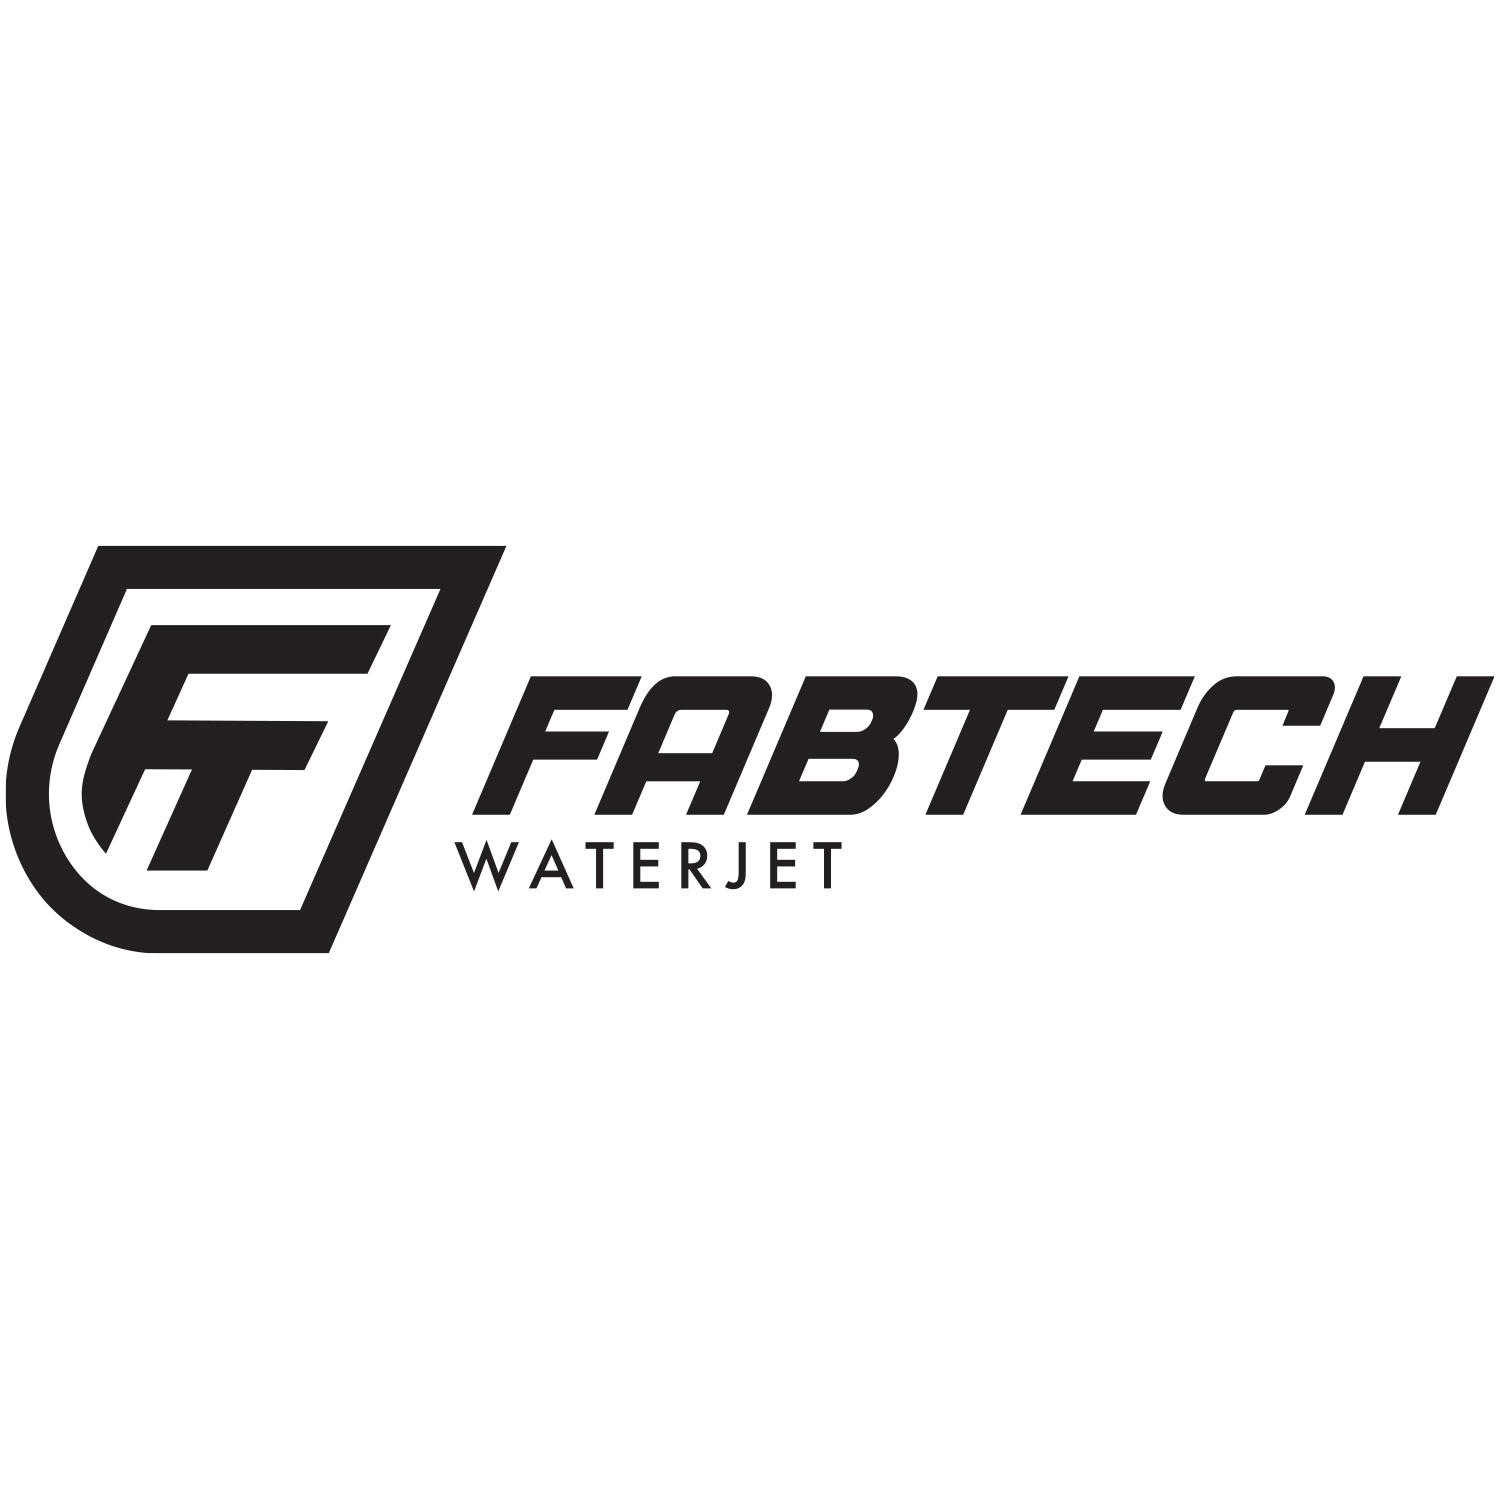 FabTech Waterjet - Pflugerville, TX 78660 - (512)251-8000 | ShowMeLocal.com